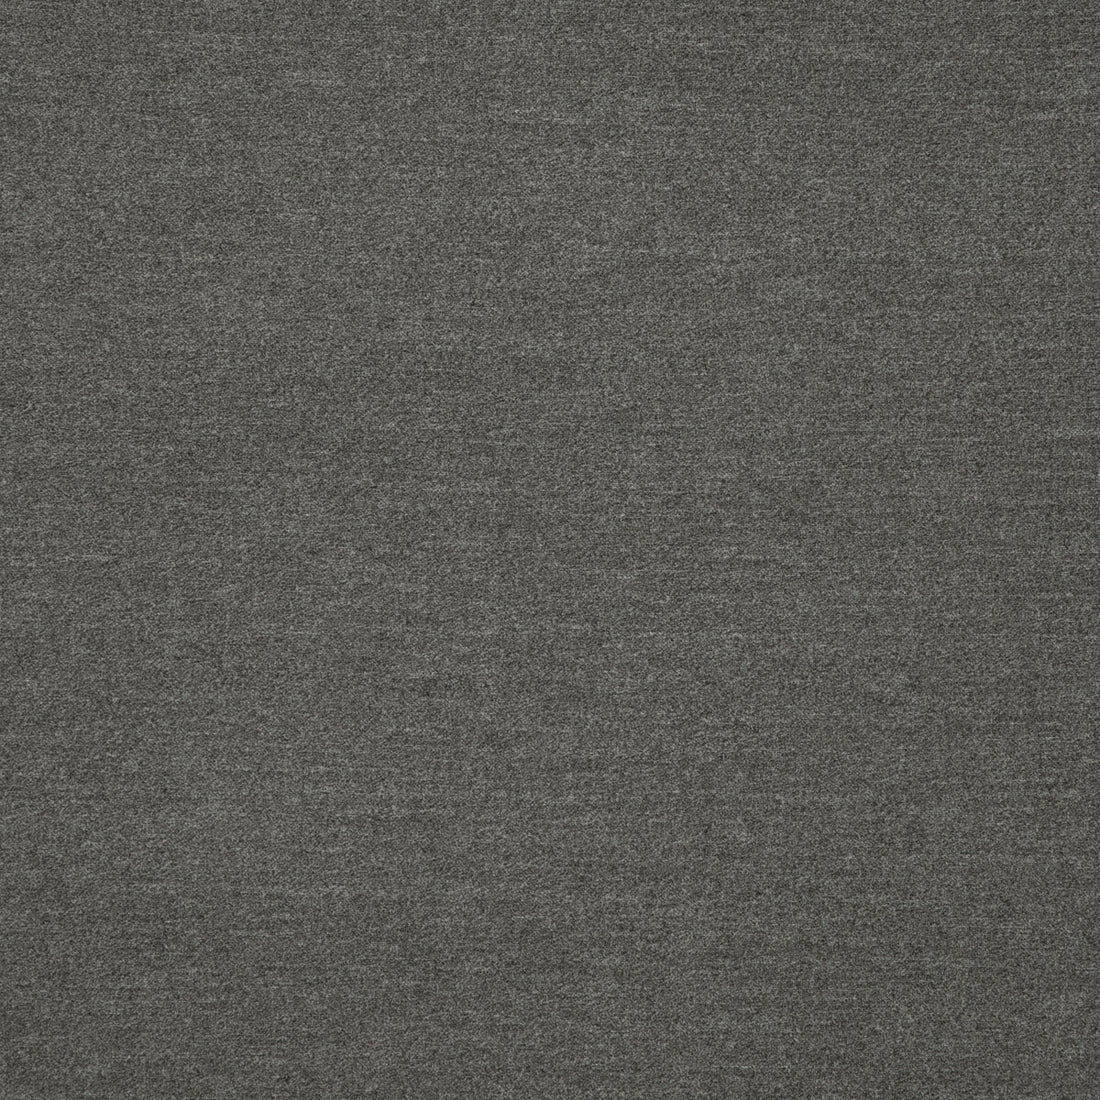 Kravet Smart fabric in 37000-2111 color - pattern 37000.2111.0 - by Kravet Smart in the Performance Kravetarmor collection